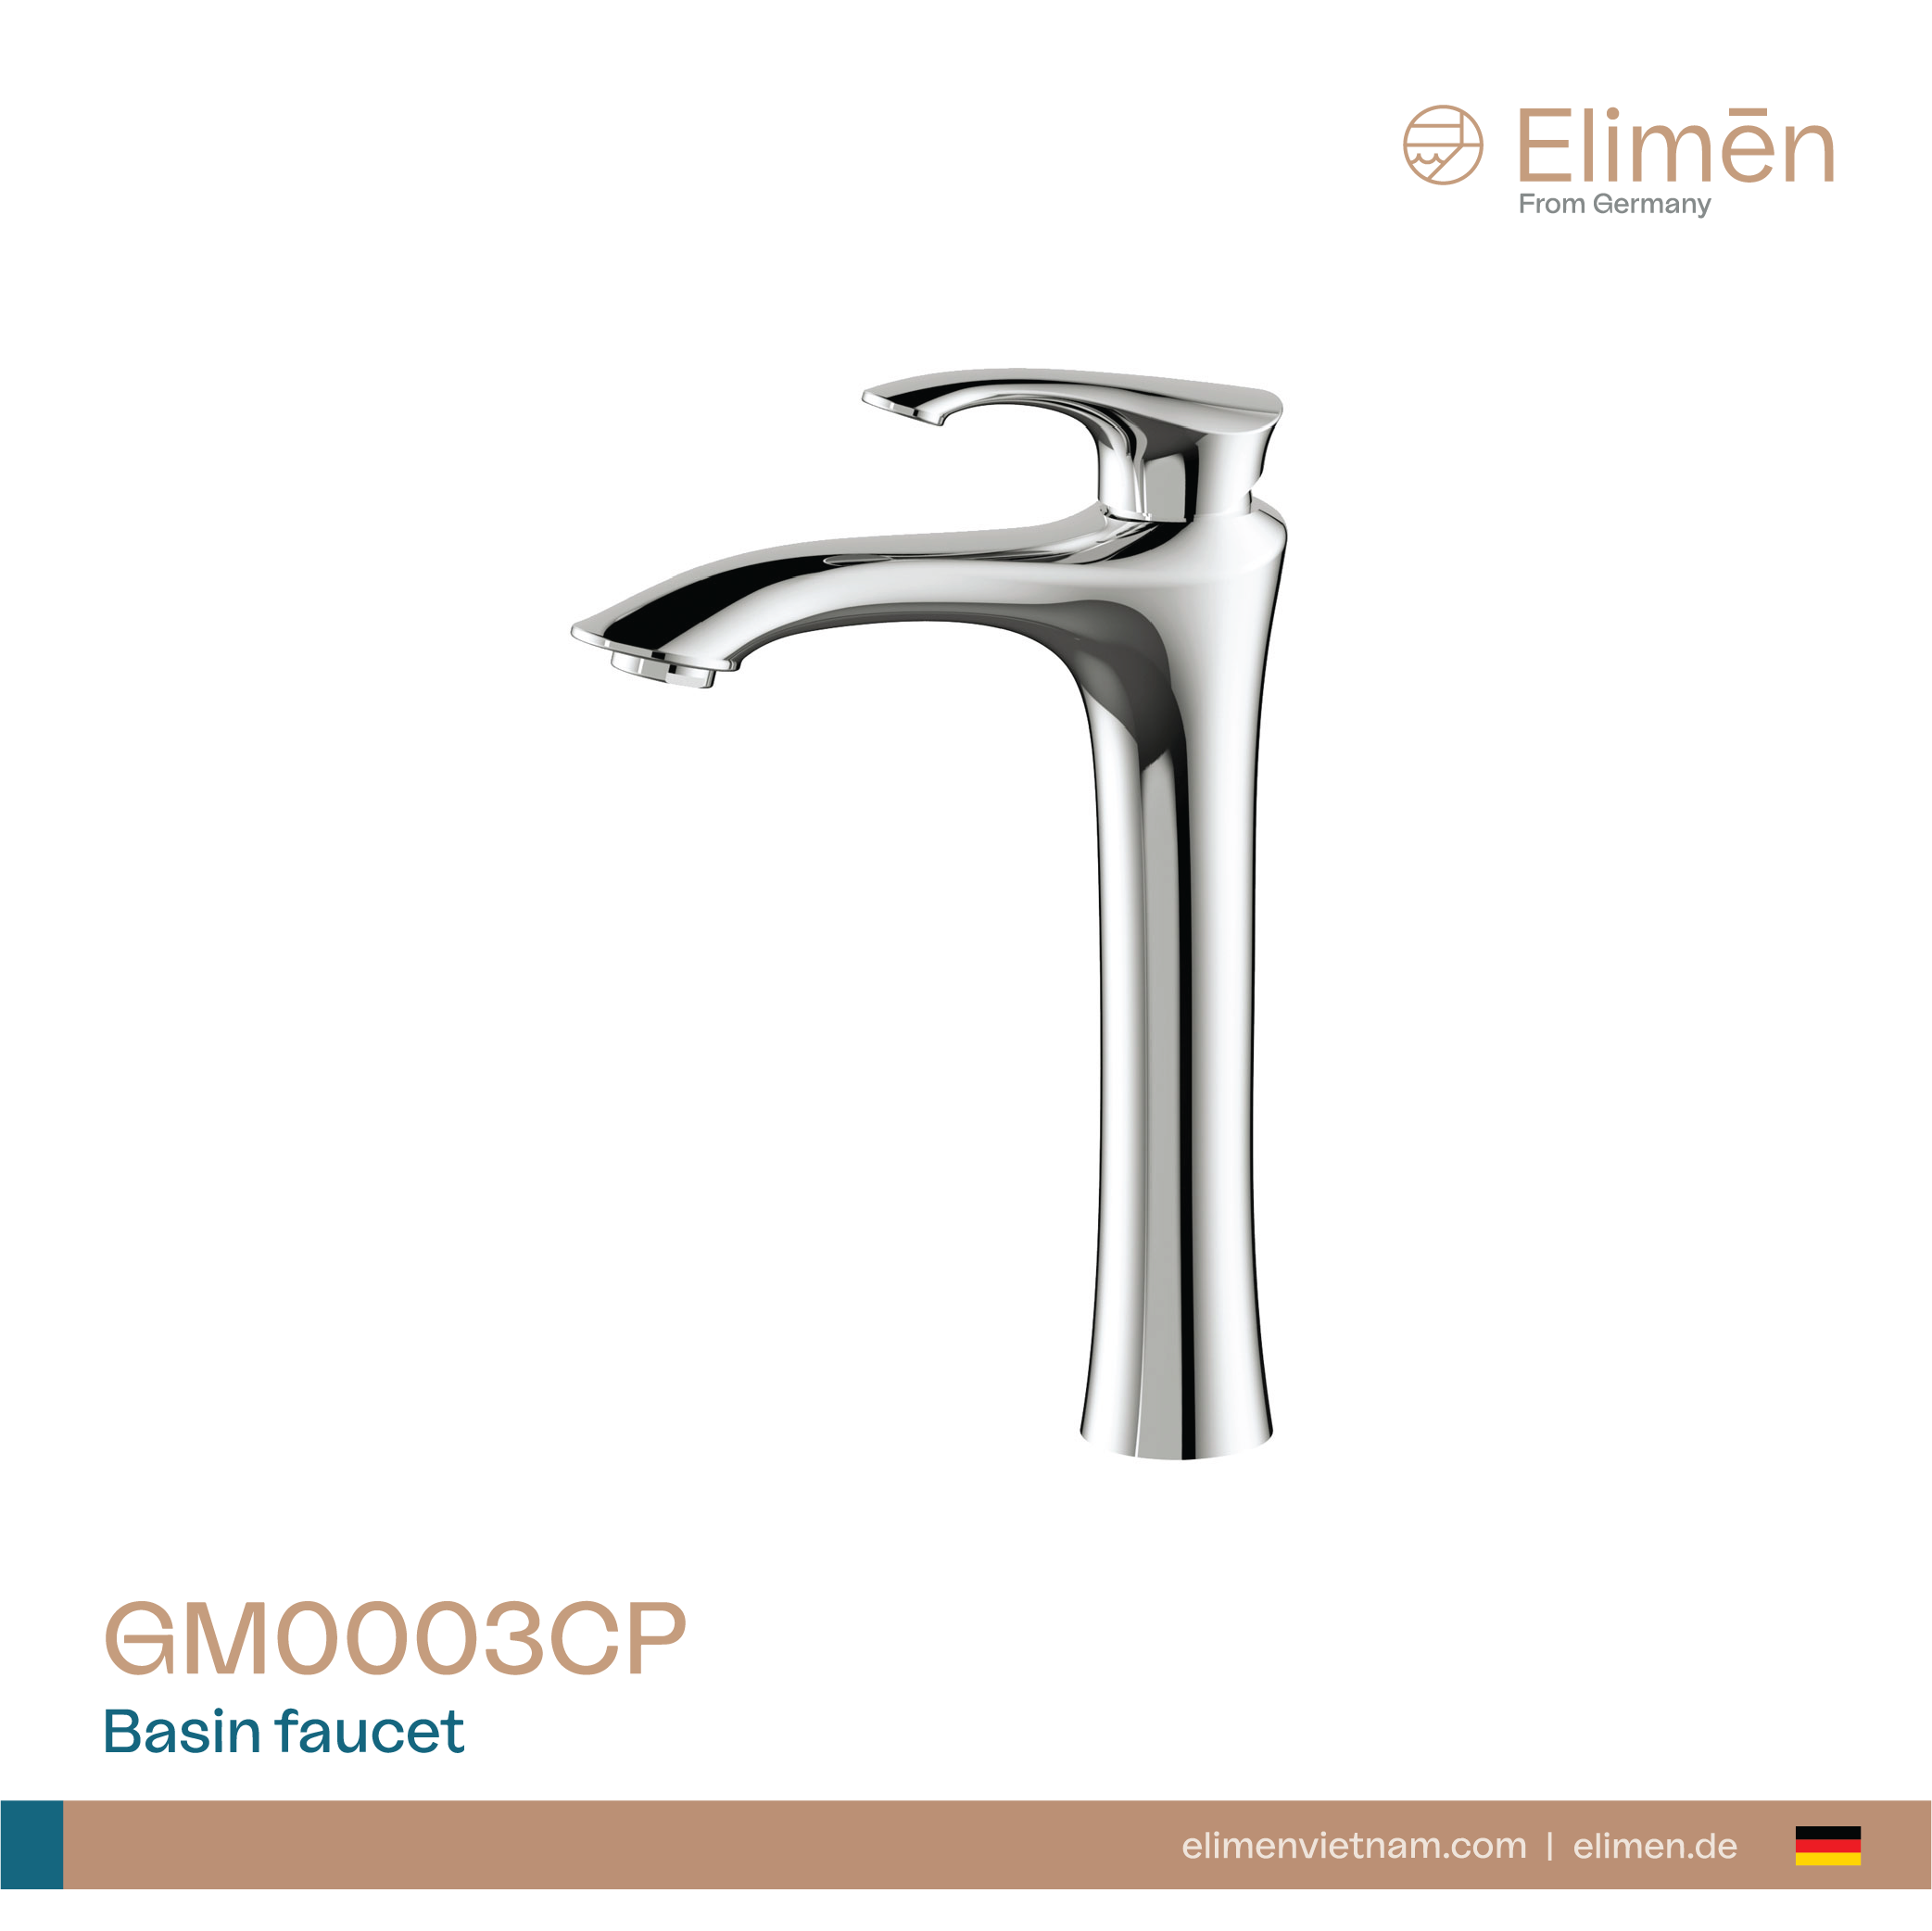 Vòi lavabo Elimen - Mã GM0003CP